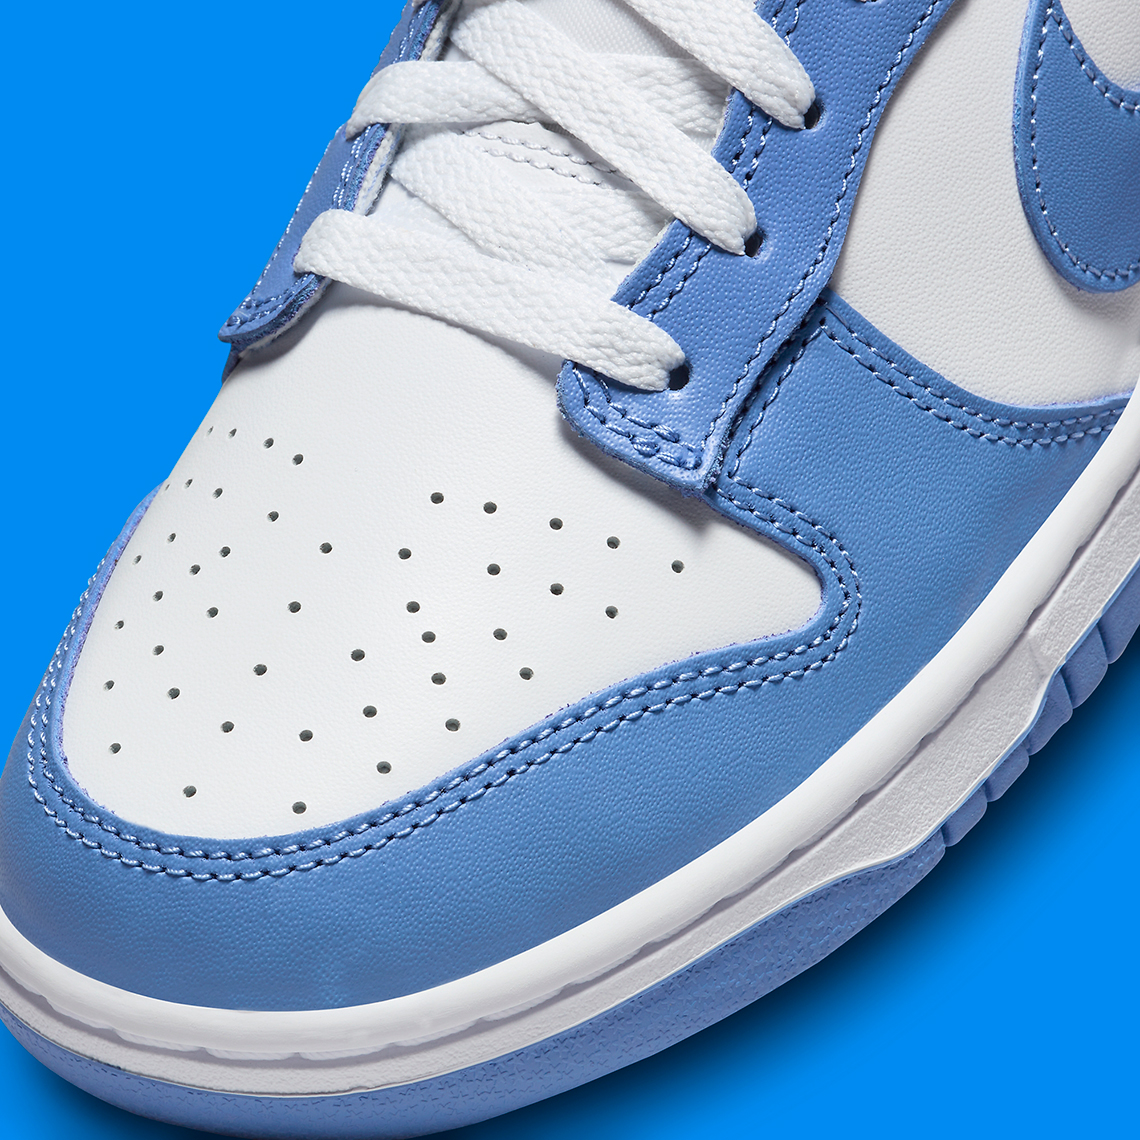 Nike Dunk Low Polar Blue Release DV0833-400 Date